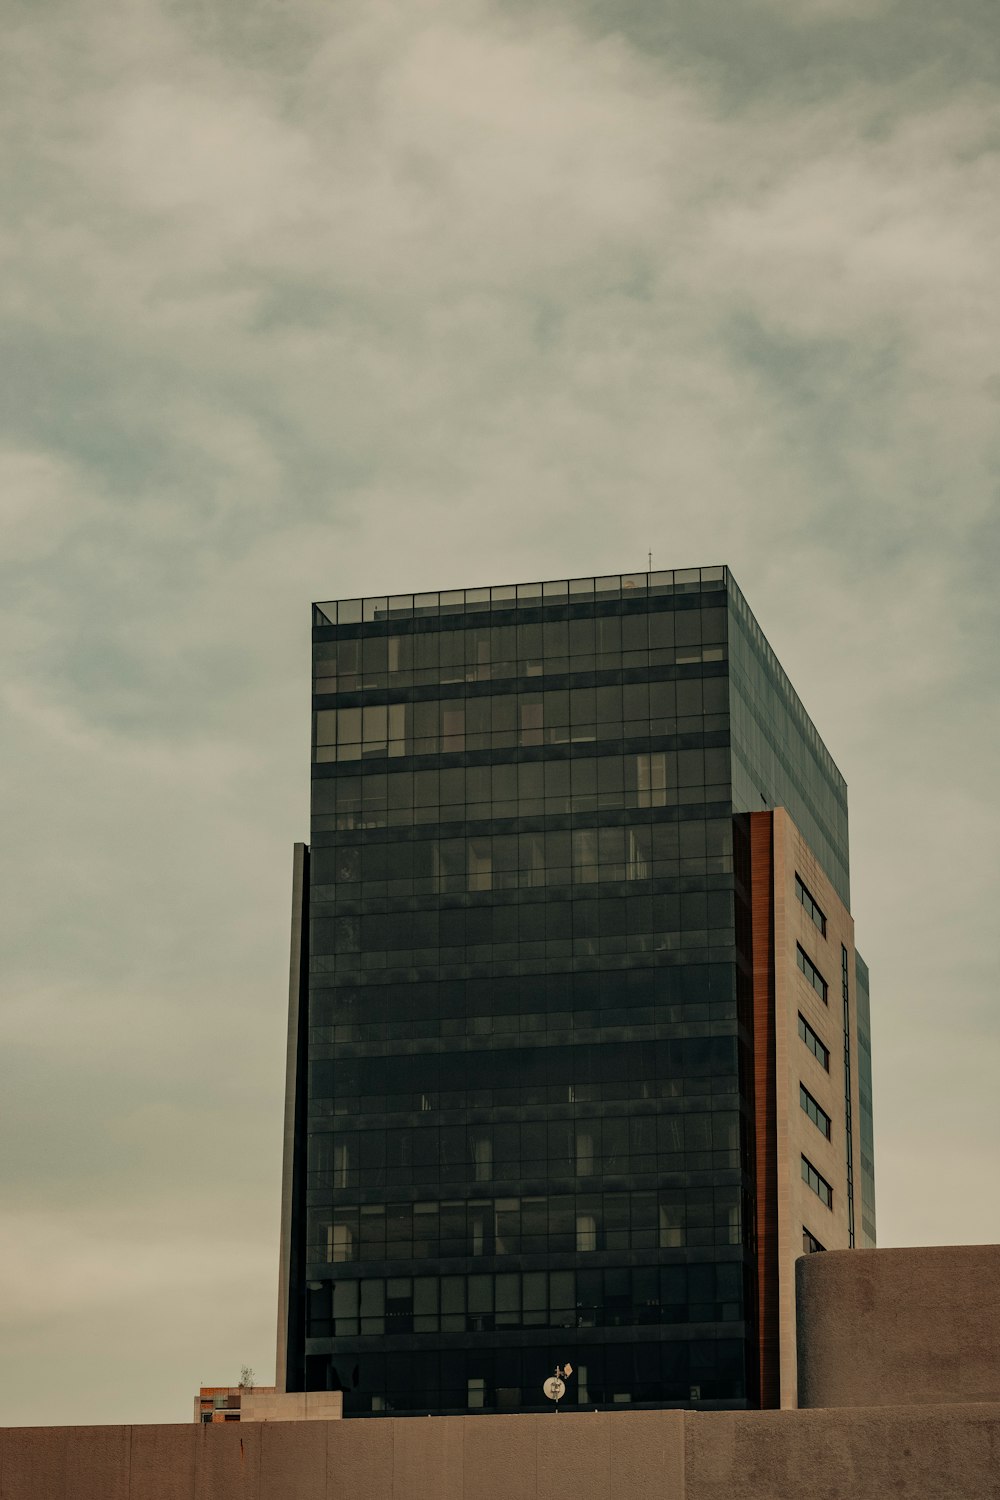 un alto edificio nero seduto accanto a un edificio alto